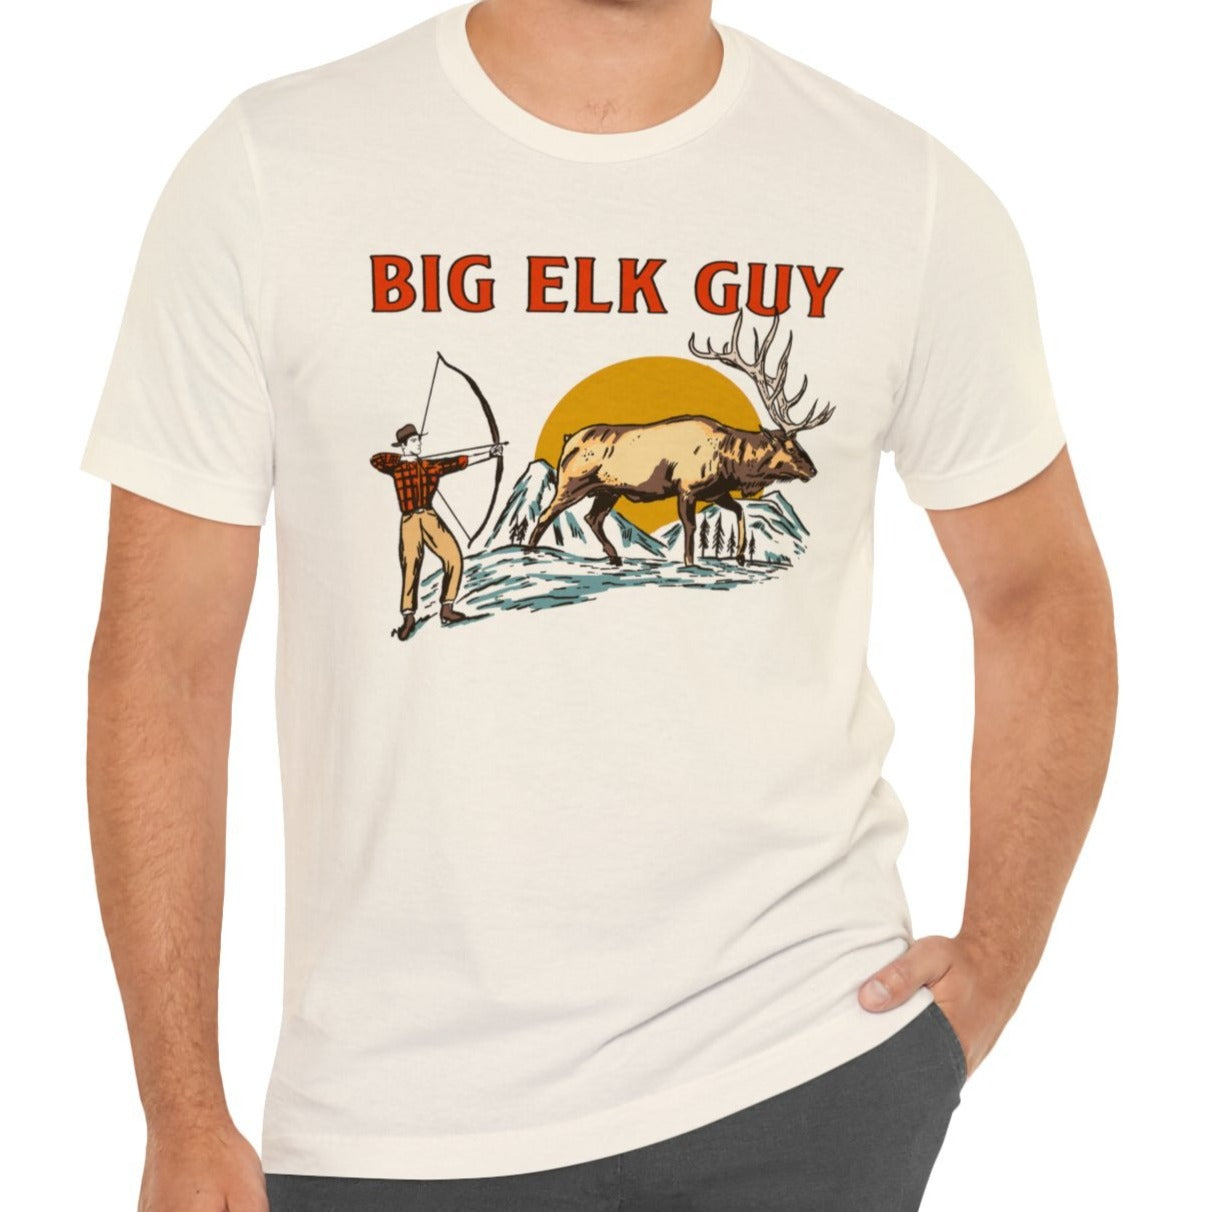 BIG ELK GUY T-SHIRT